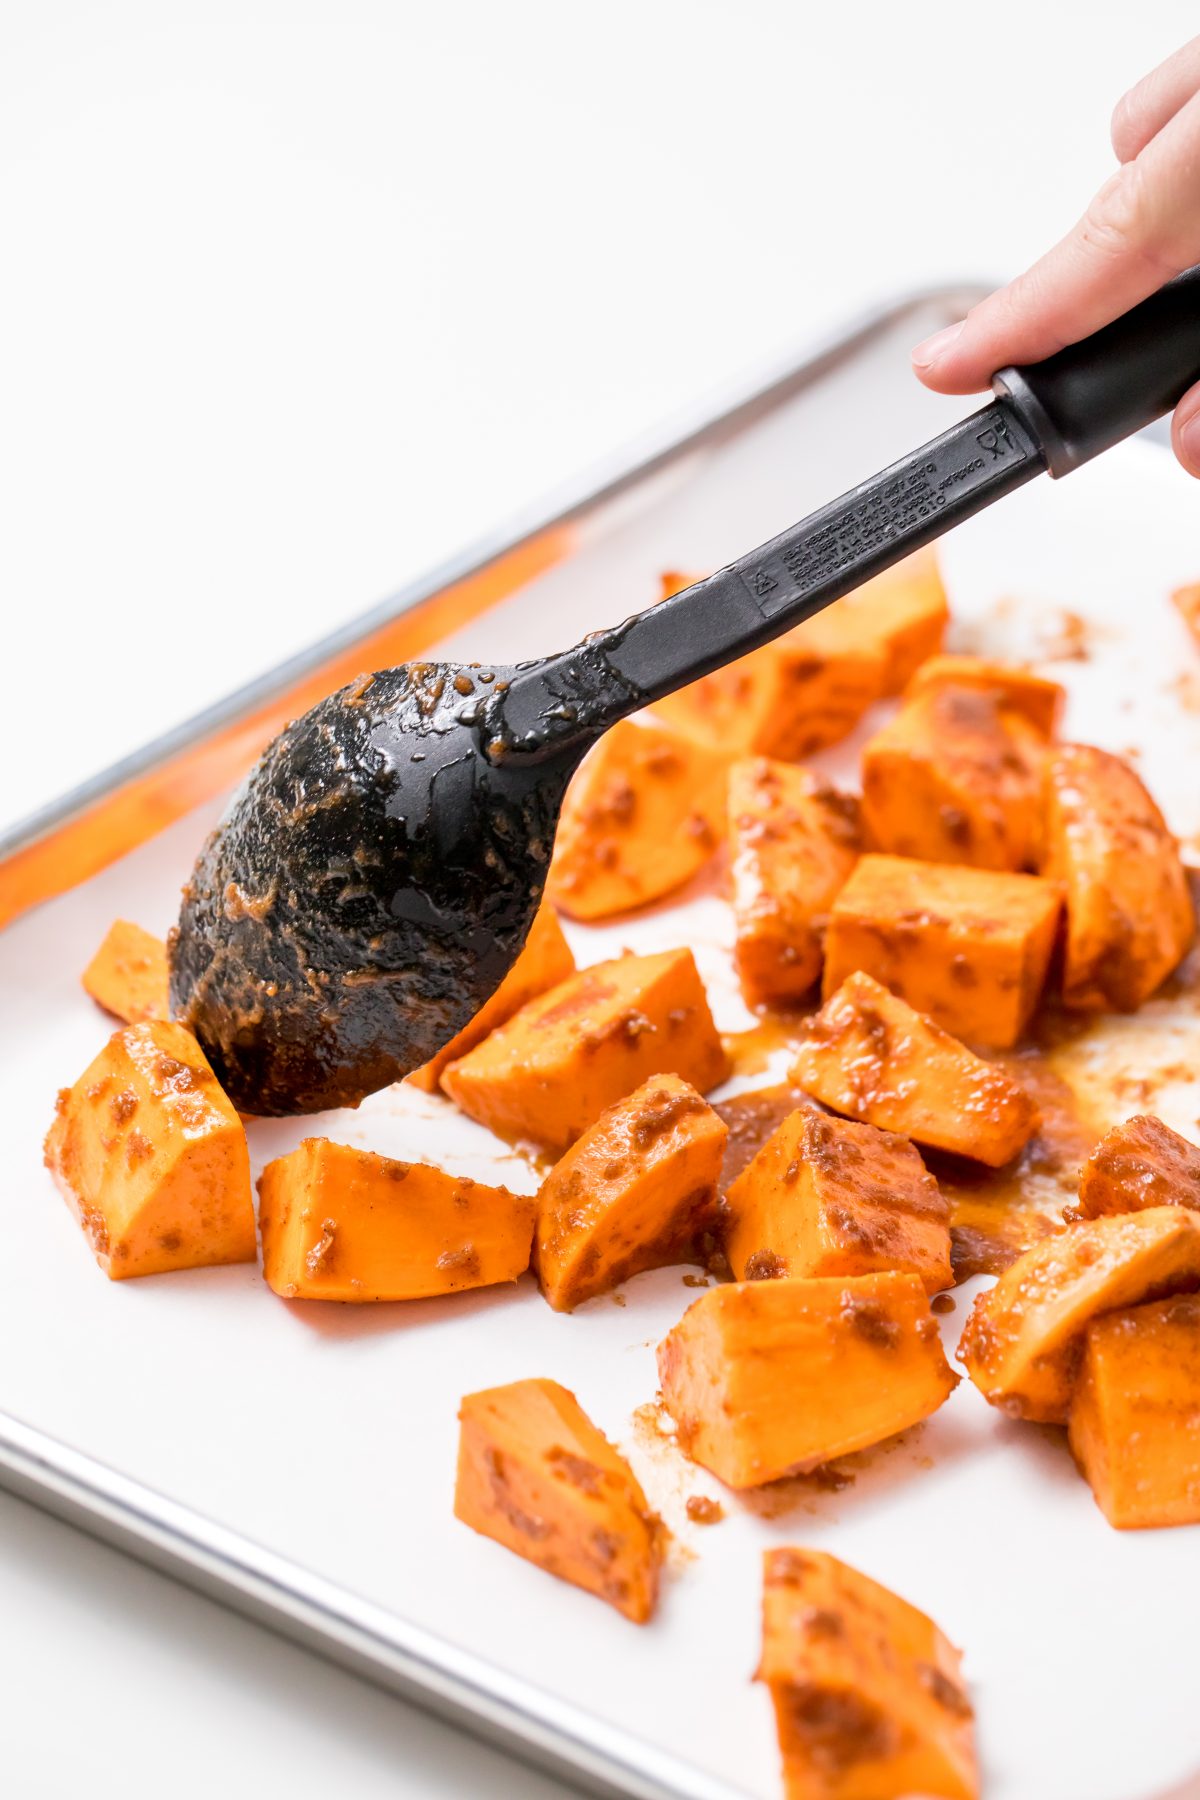 Honey cinnamon roasted sweet potatoes - Transfer the sweet potatoes to a baking sheet